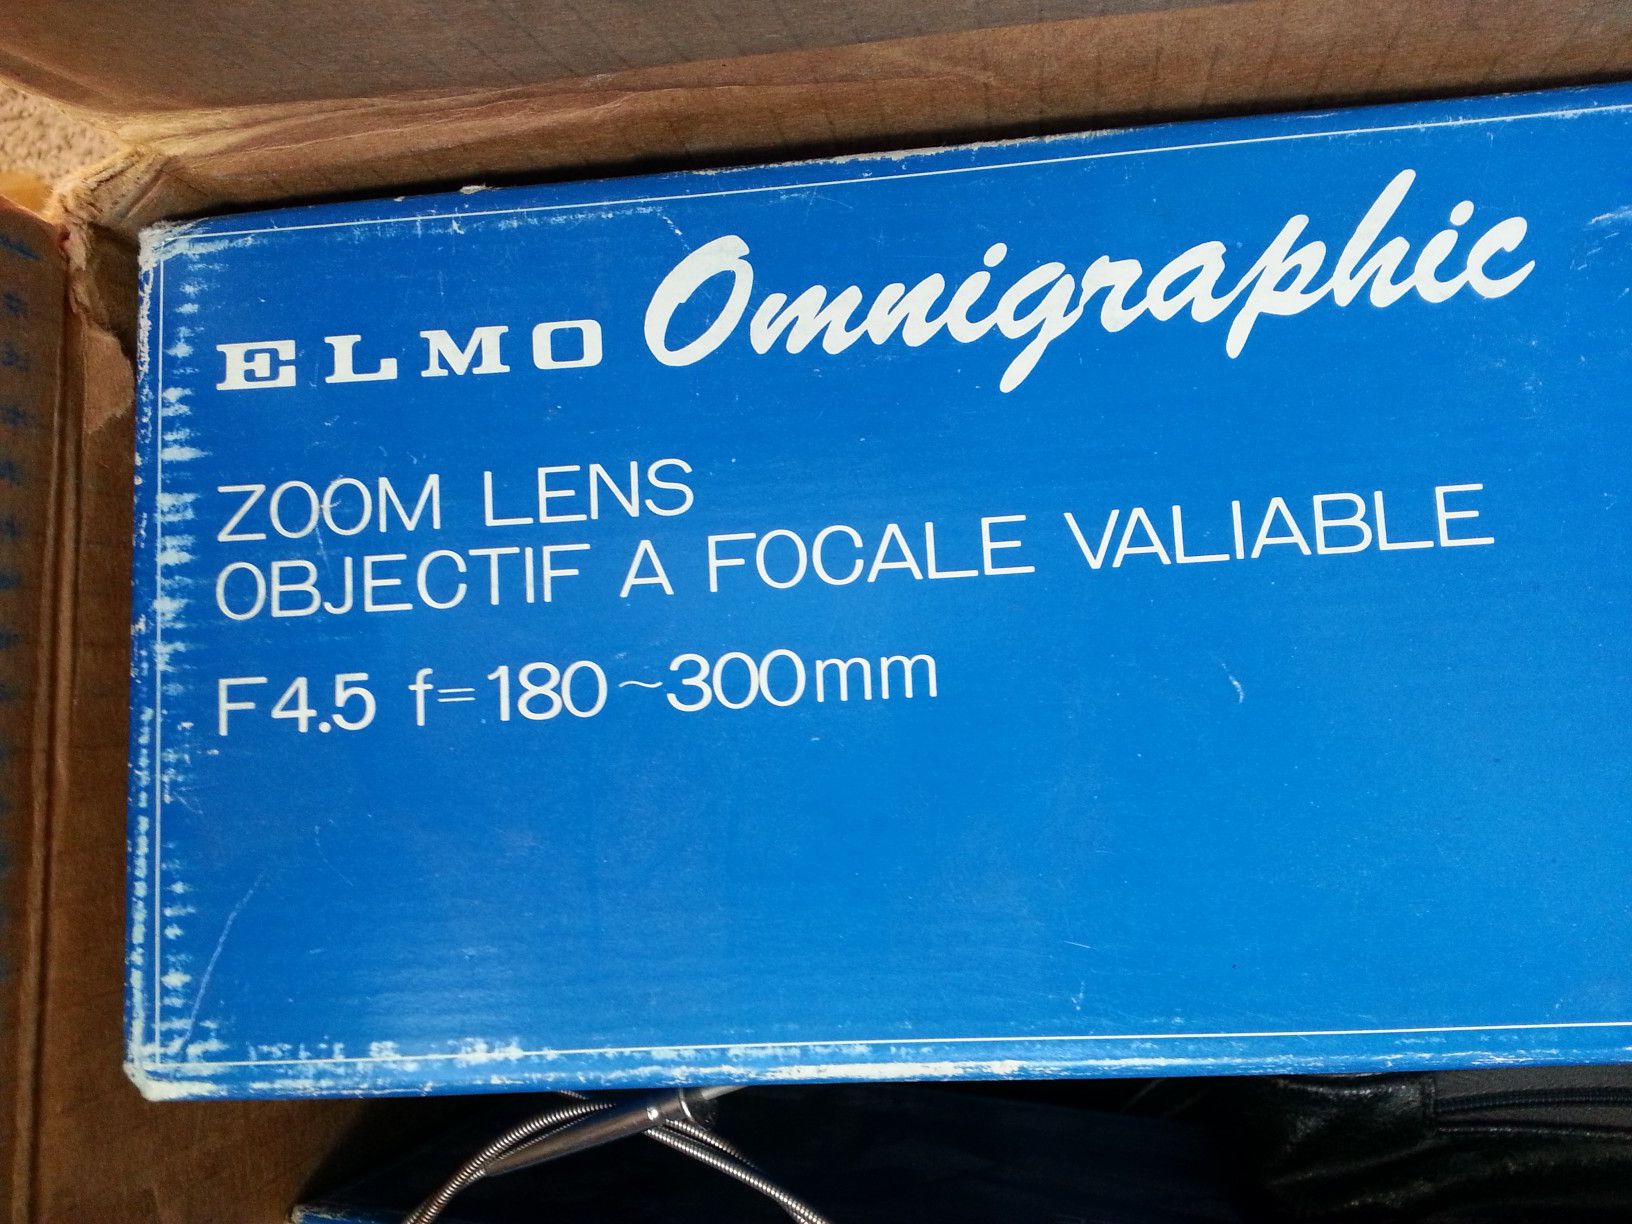 EL.MO Omnigraphic Zoom Lens